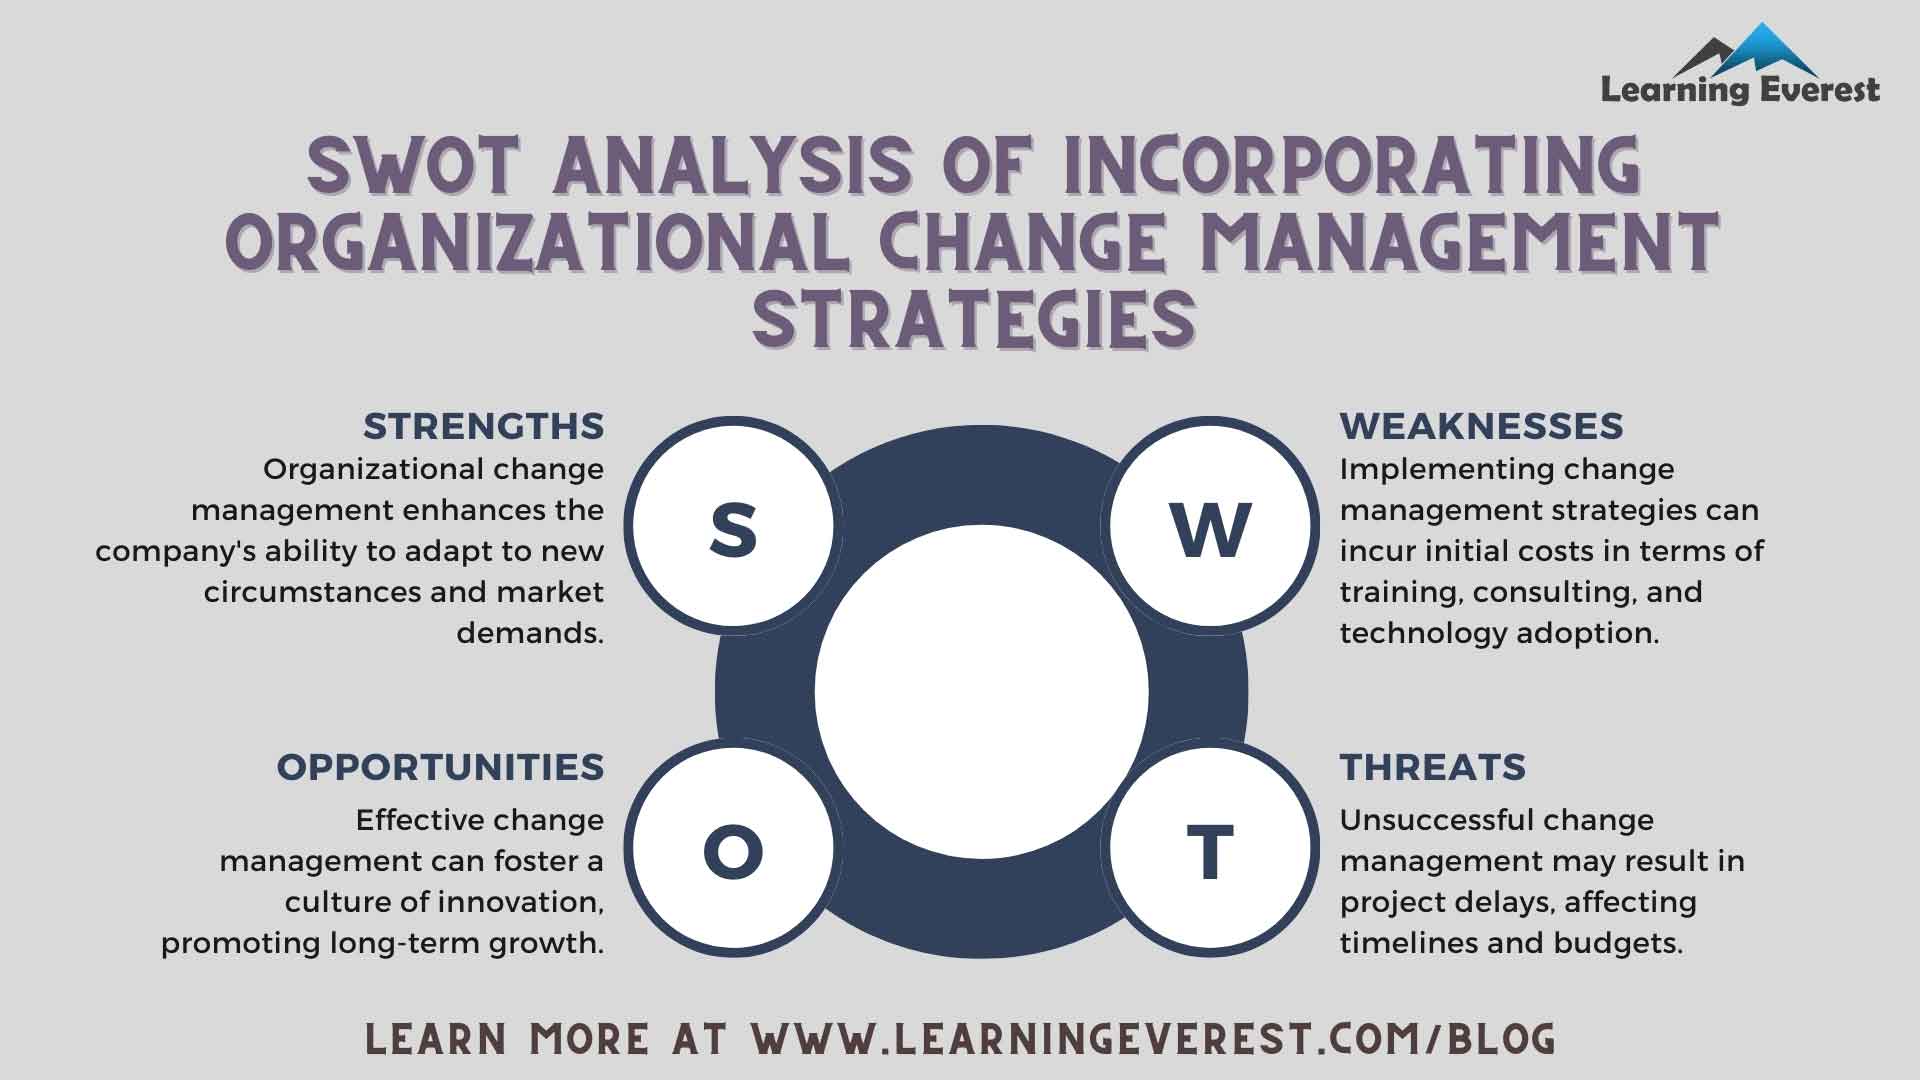 SWOT Analysis of Incorporating Organizational Change Management Strategies